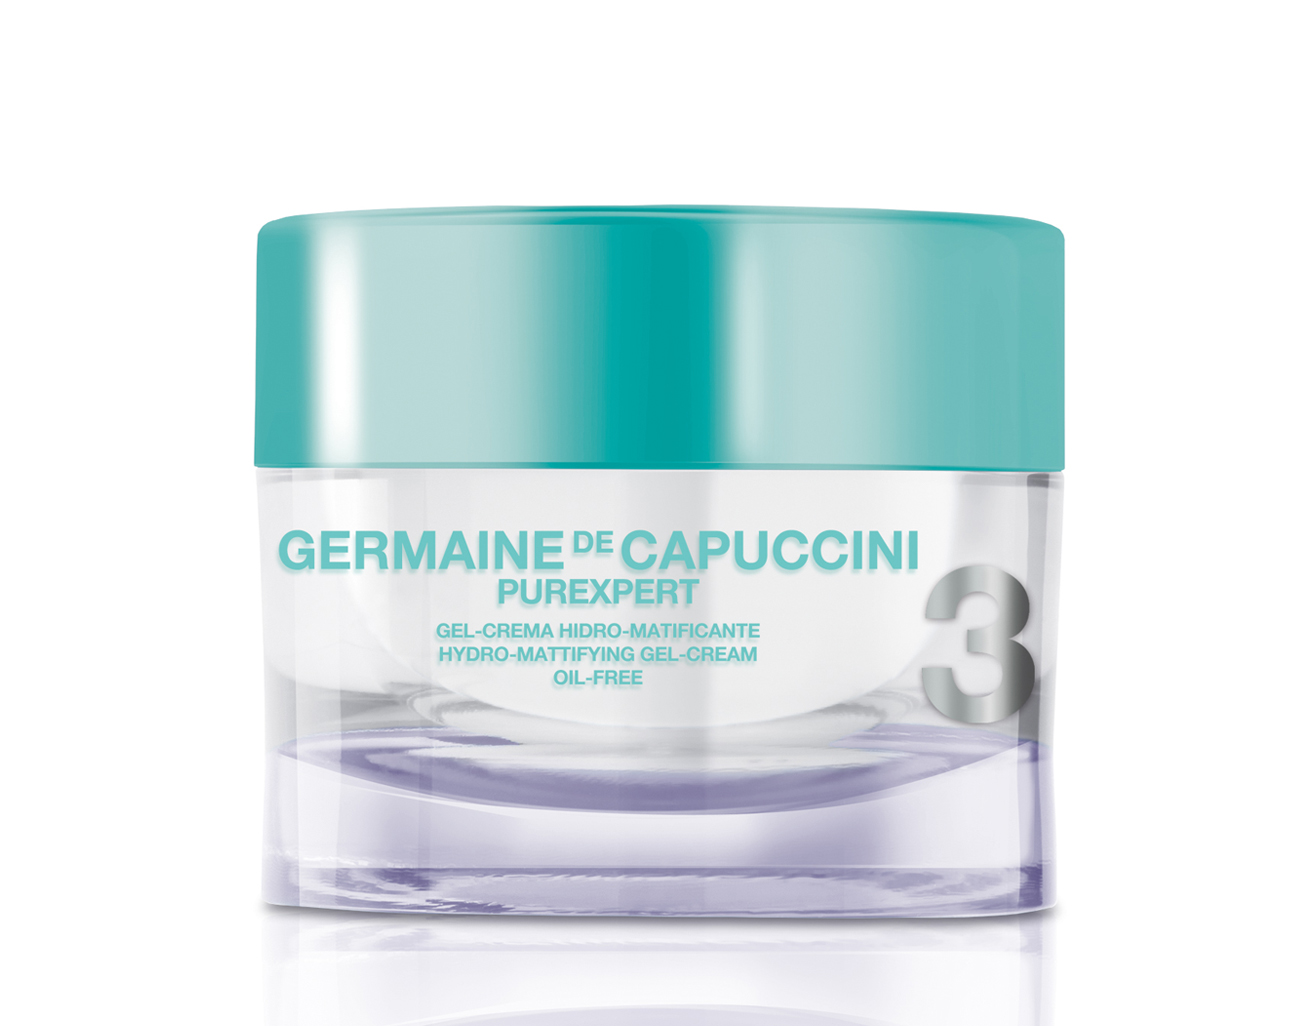 Crema hidro-matificante oil-free de Germaine de Capuccini